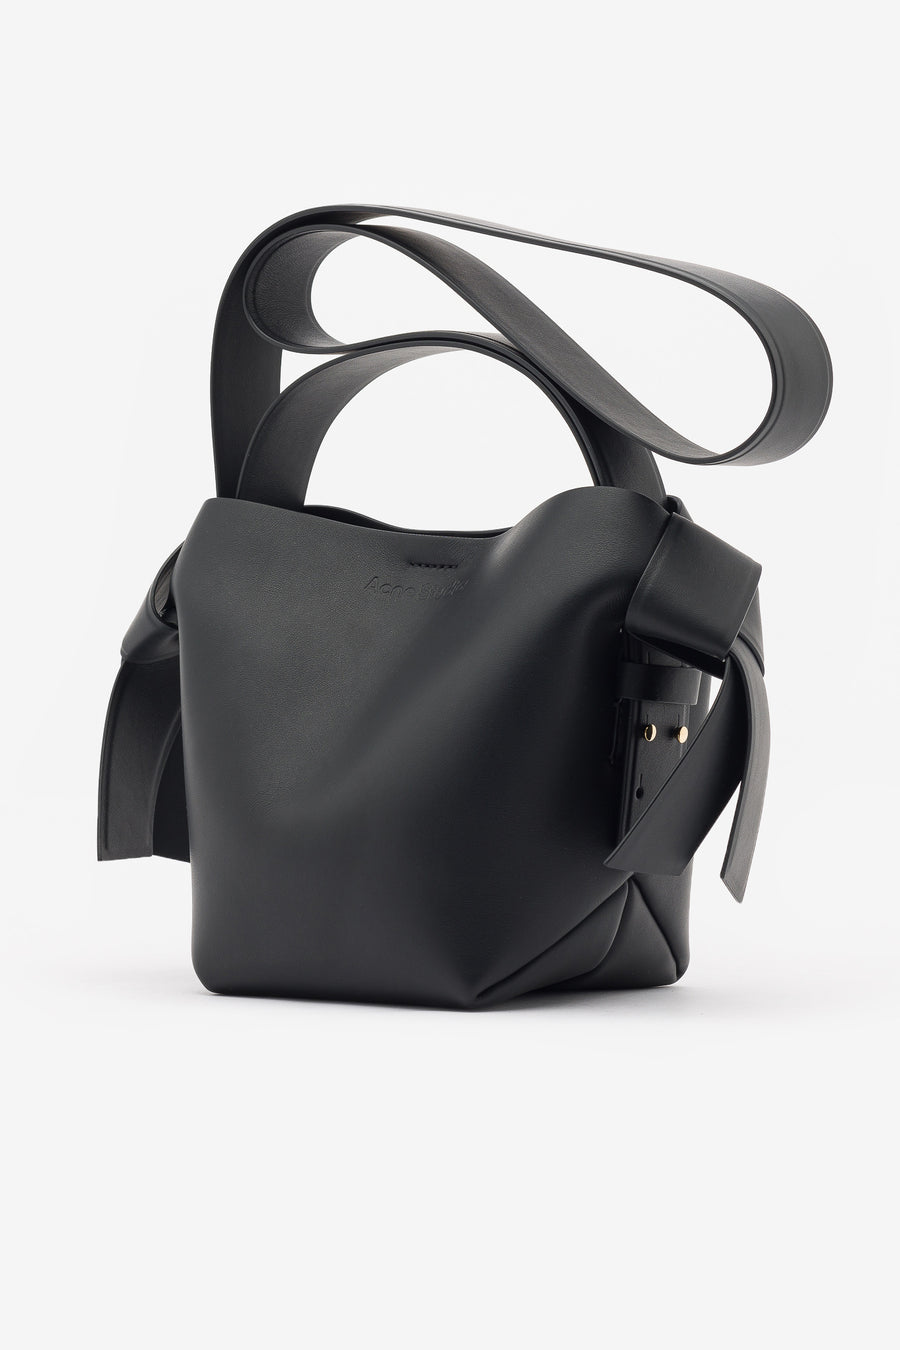 Acne Studios - Musubi mini shoulder bag - White/black